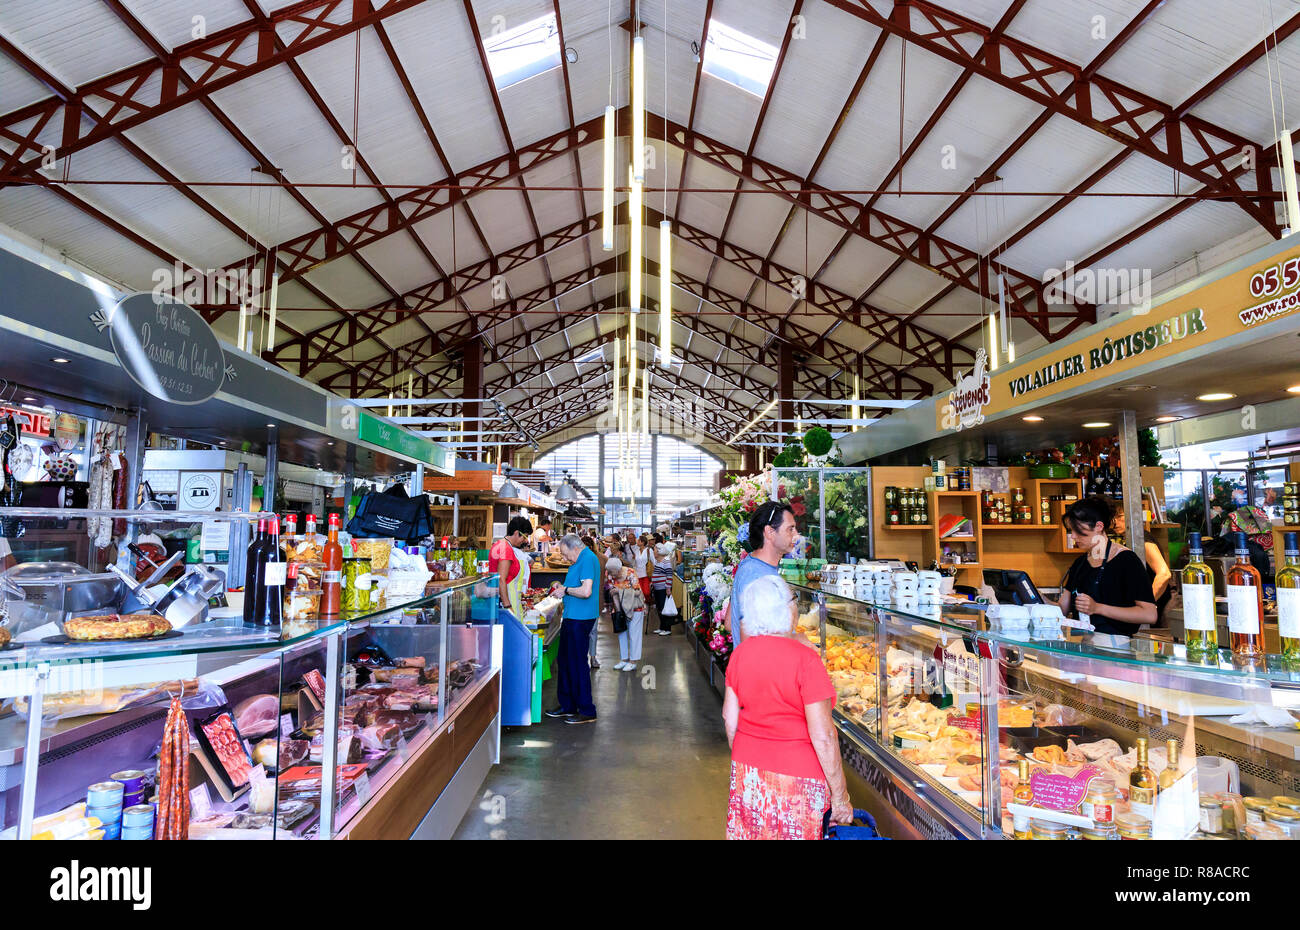 The Market, Biarritz, France Stock Photo